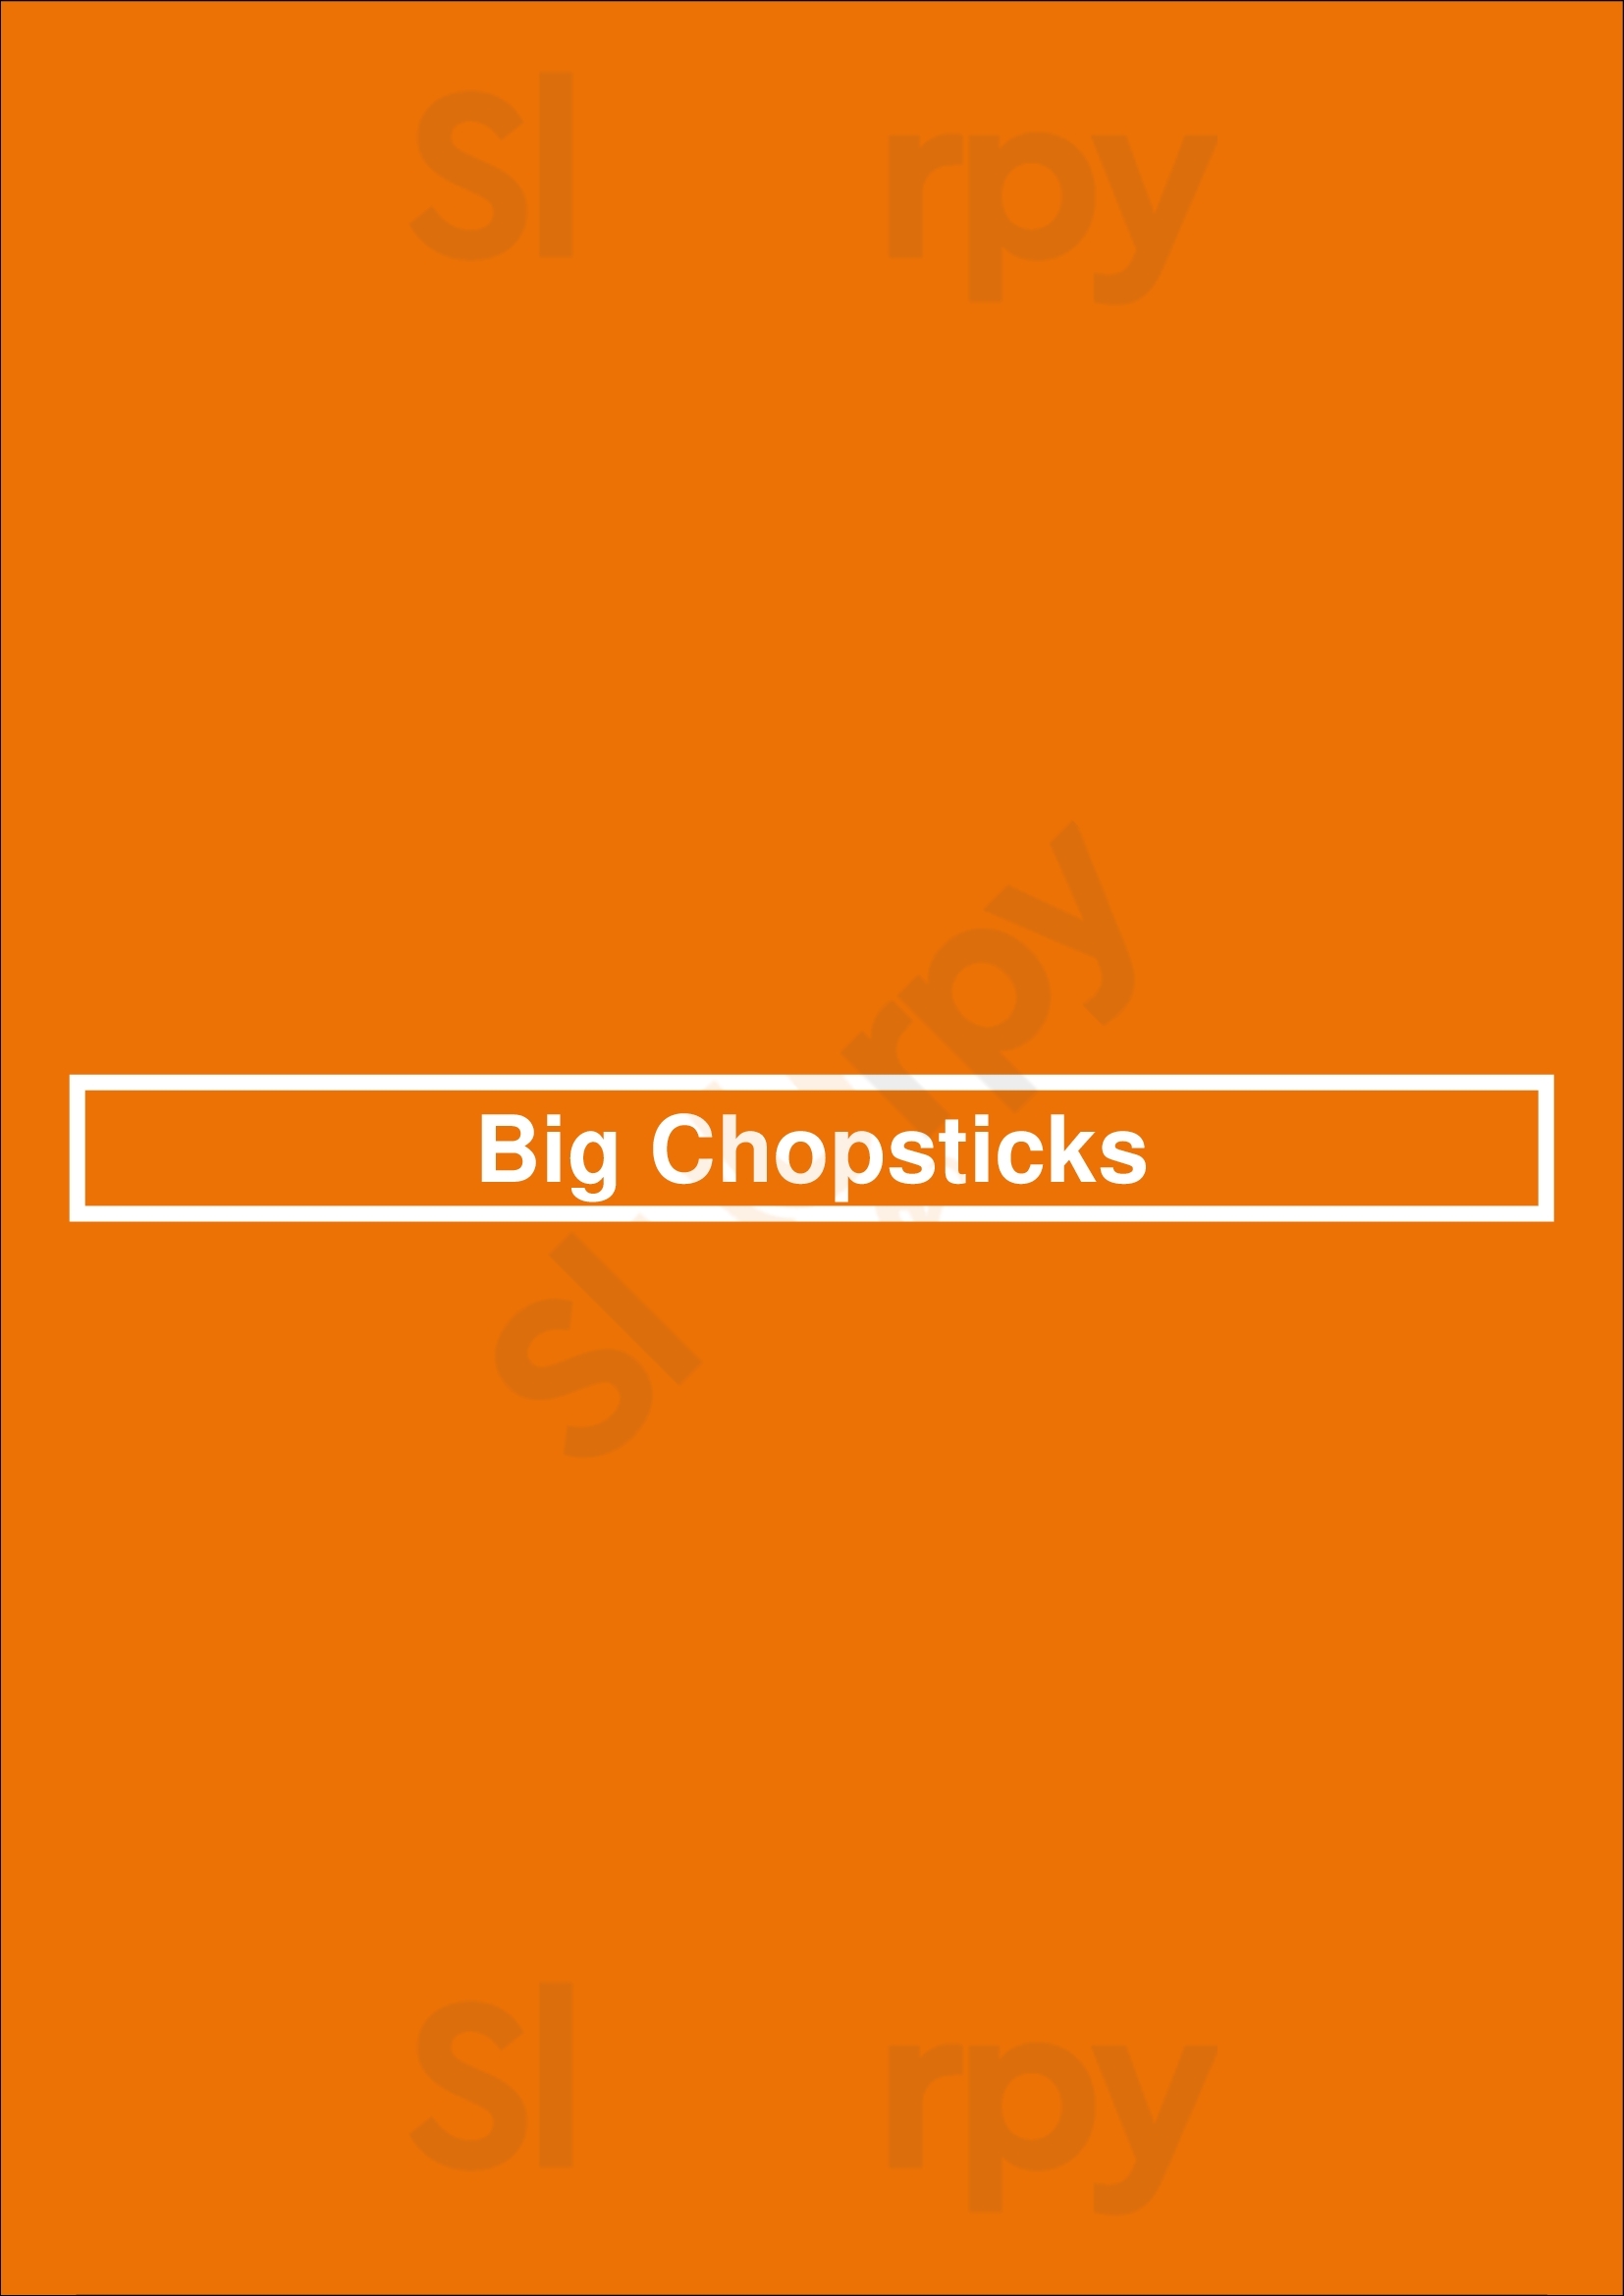 Big Chopsticks Long Beach Menu - 1